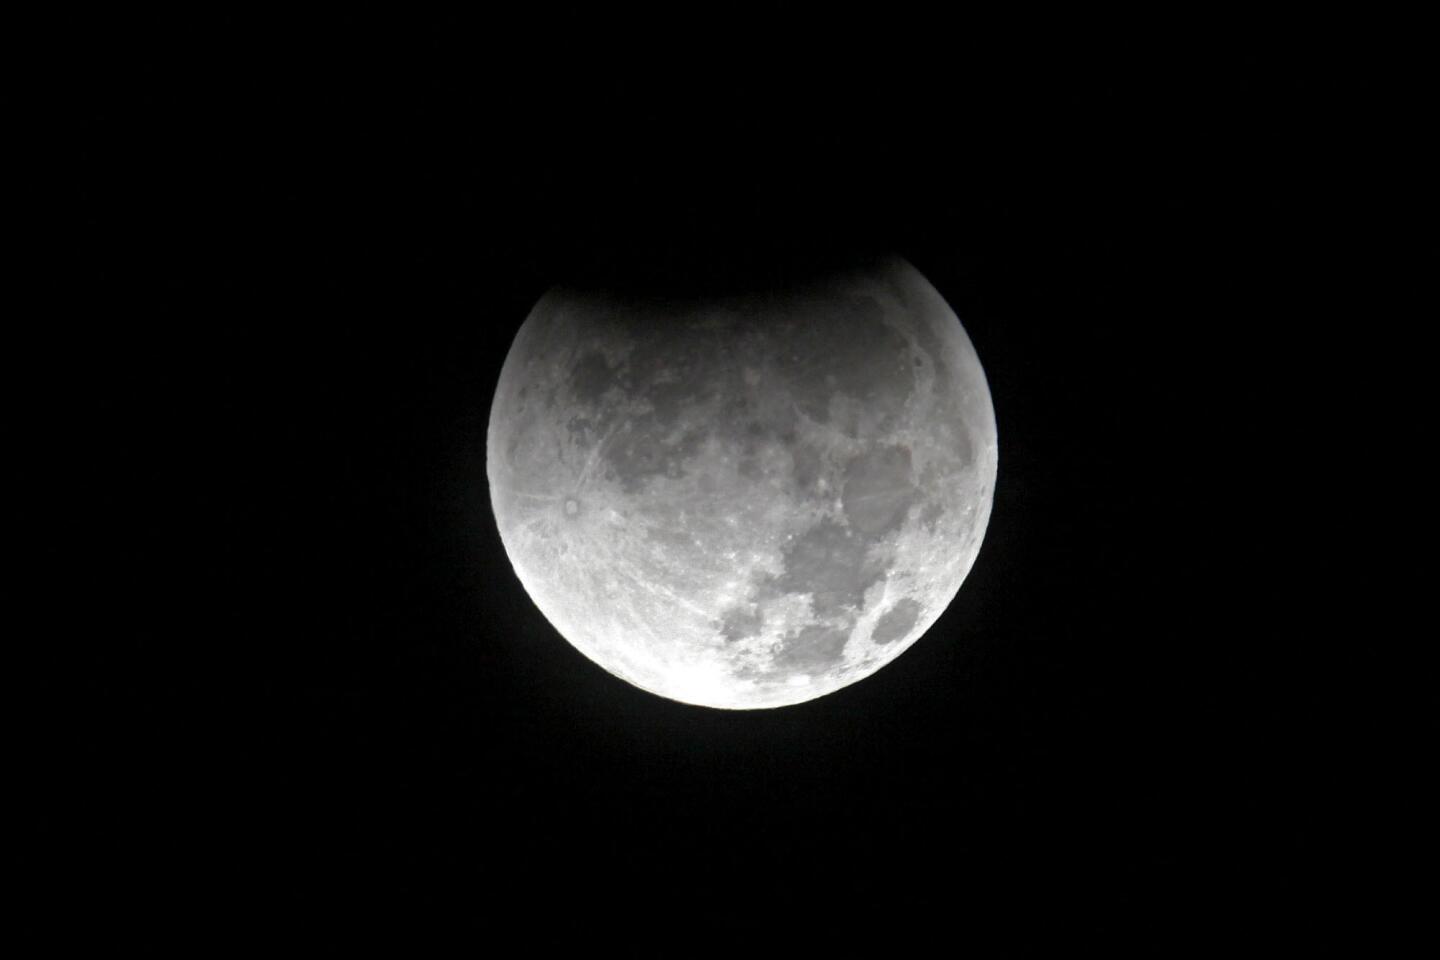 Lunar Eclipse as seen at around 5 am on Saturday, December 10, 2011.